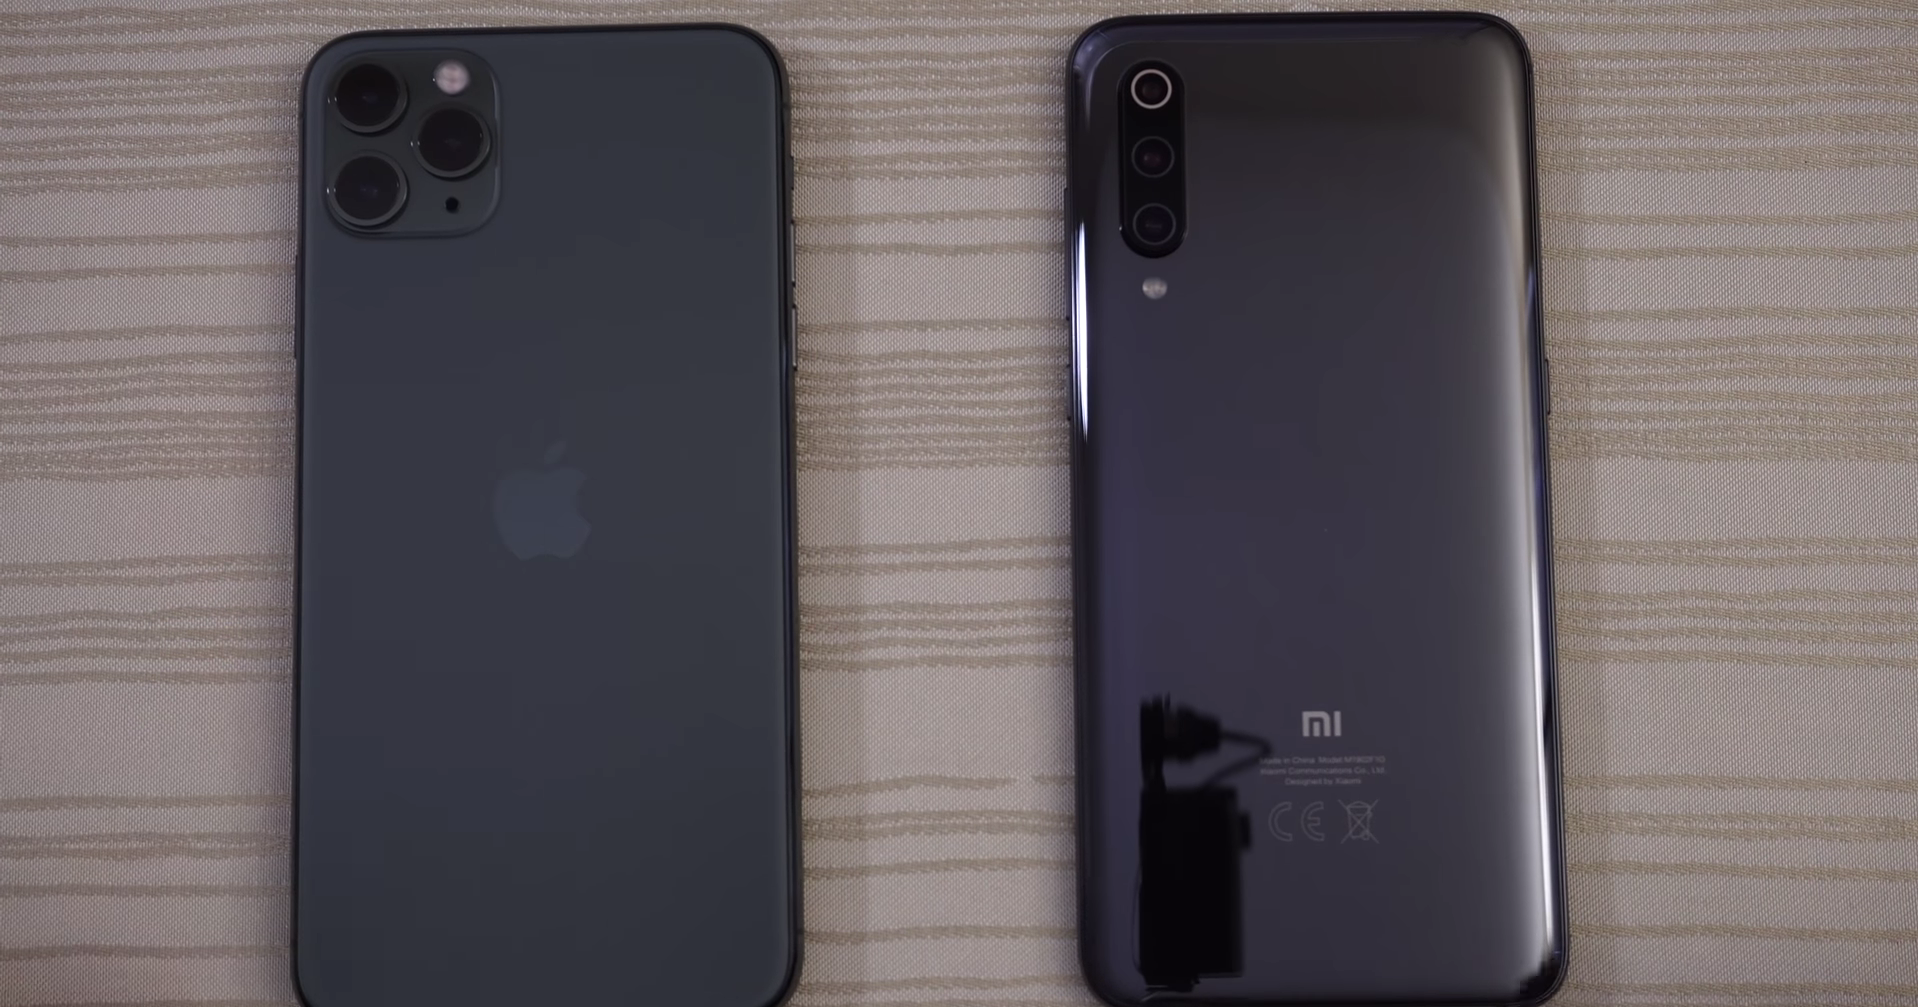 iPhone 11 Pro Max против Xiaomi Mi 9: сравнение скорости